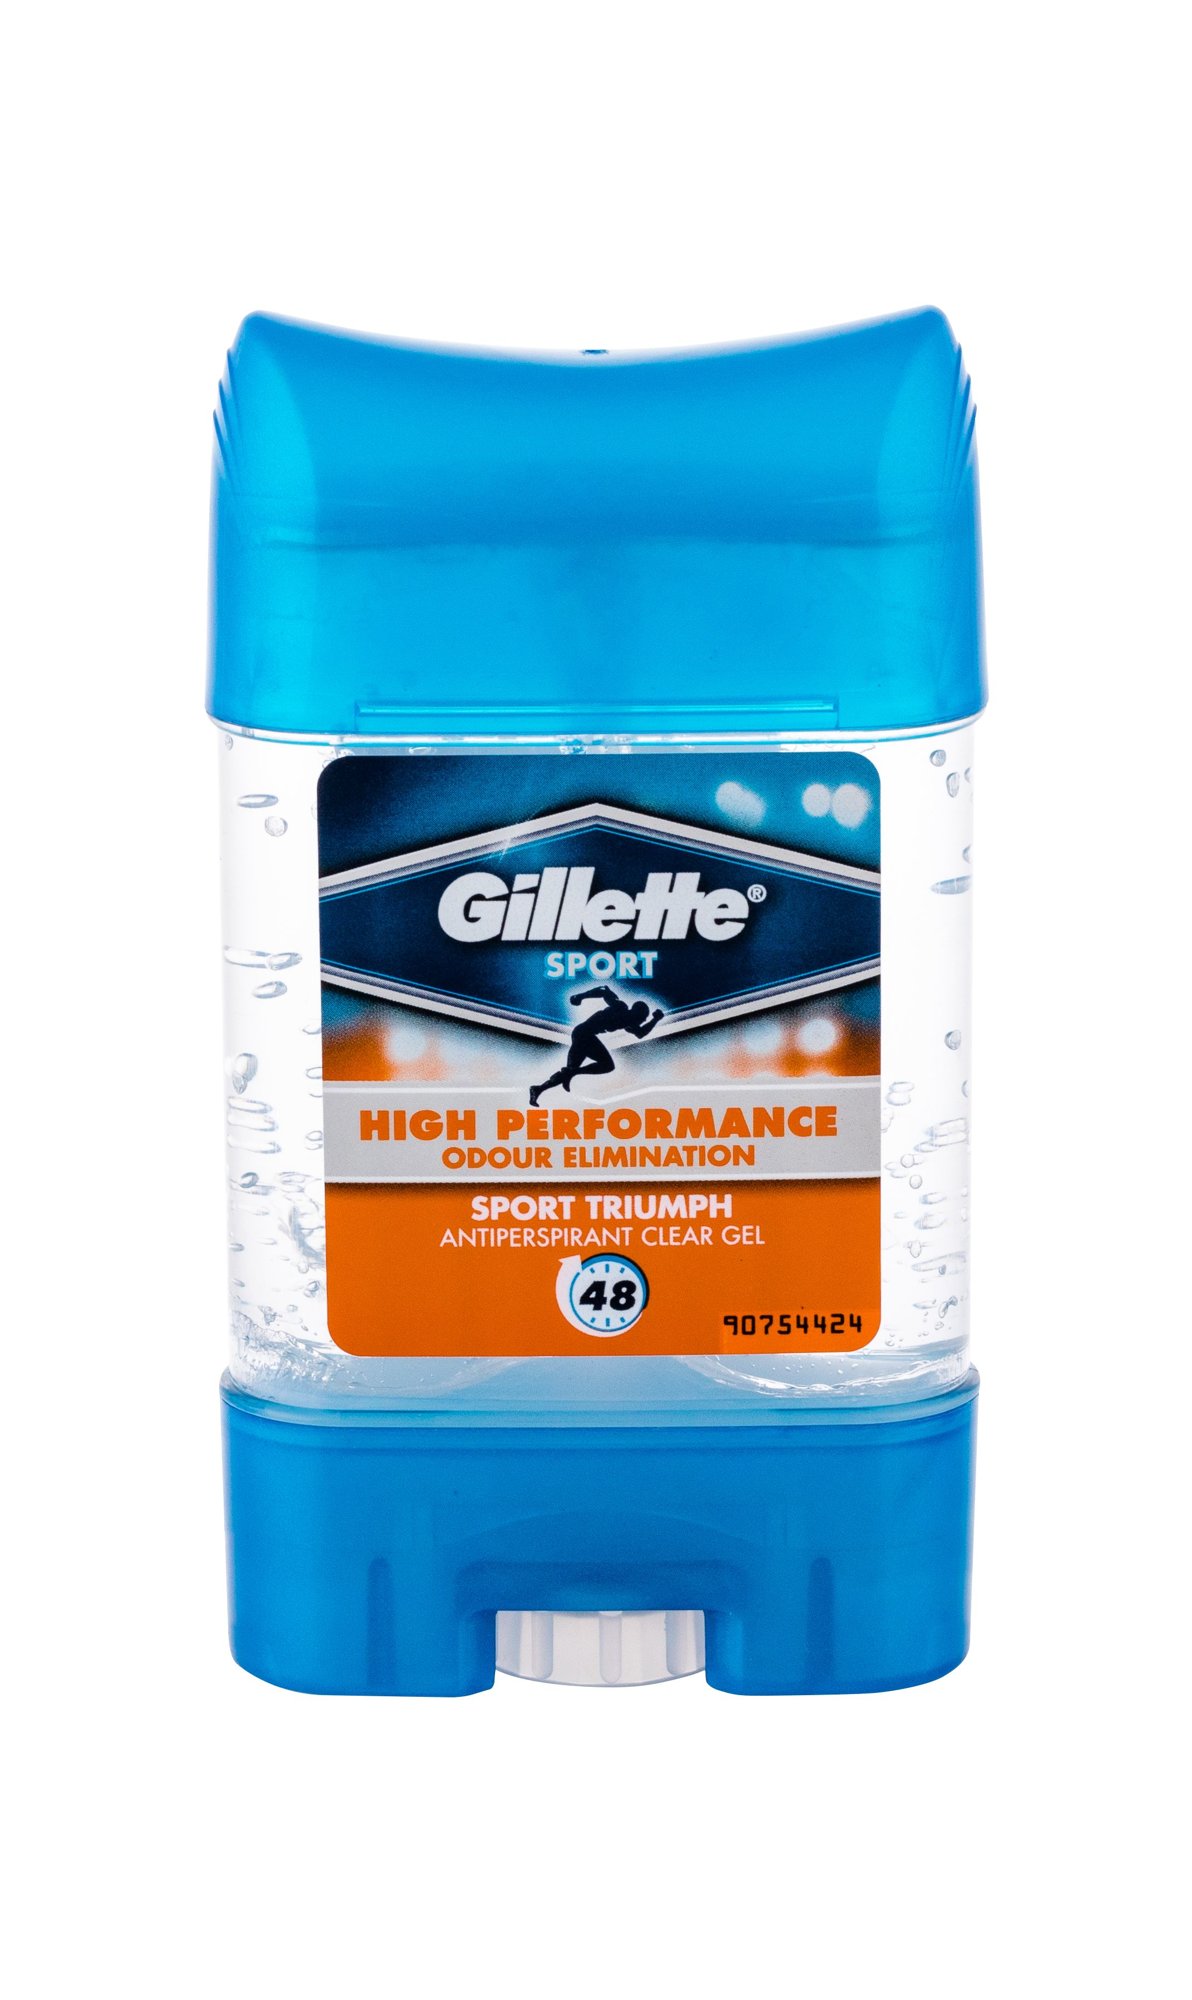 Gillette High Performance